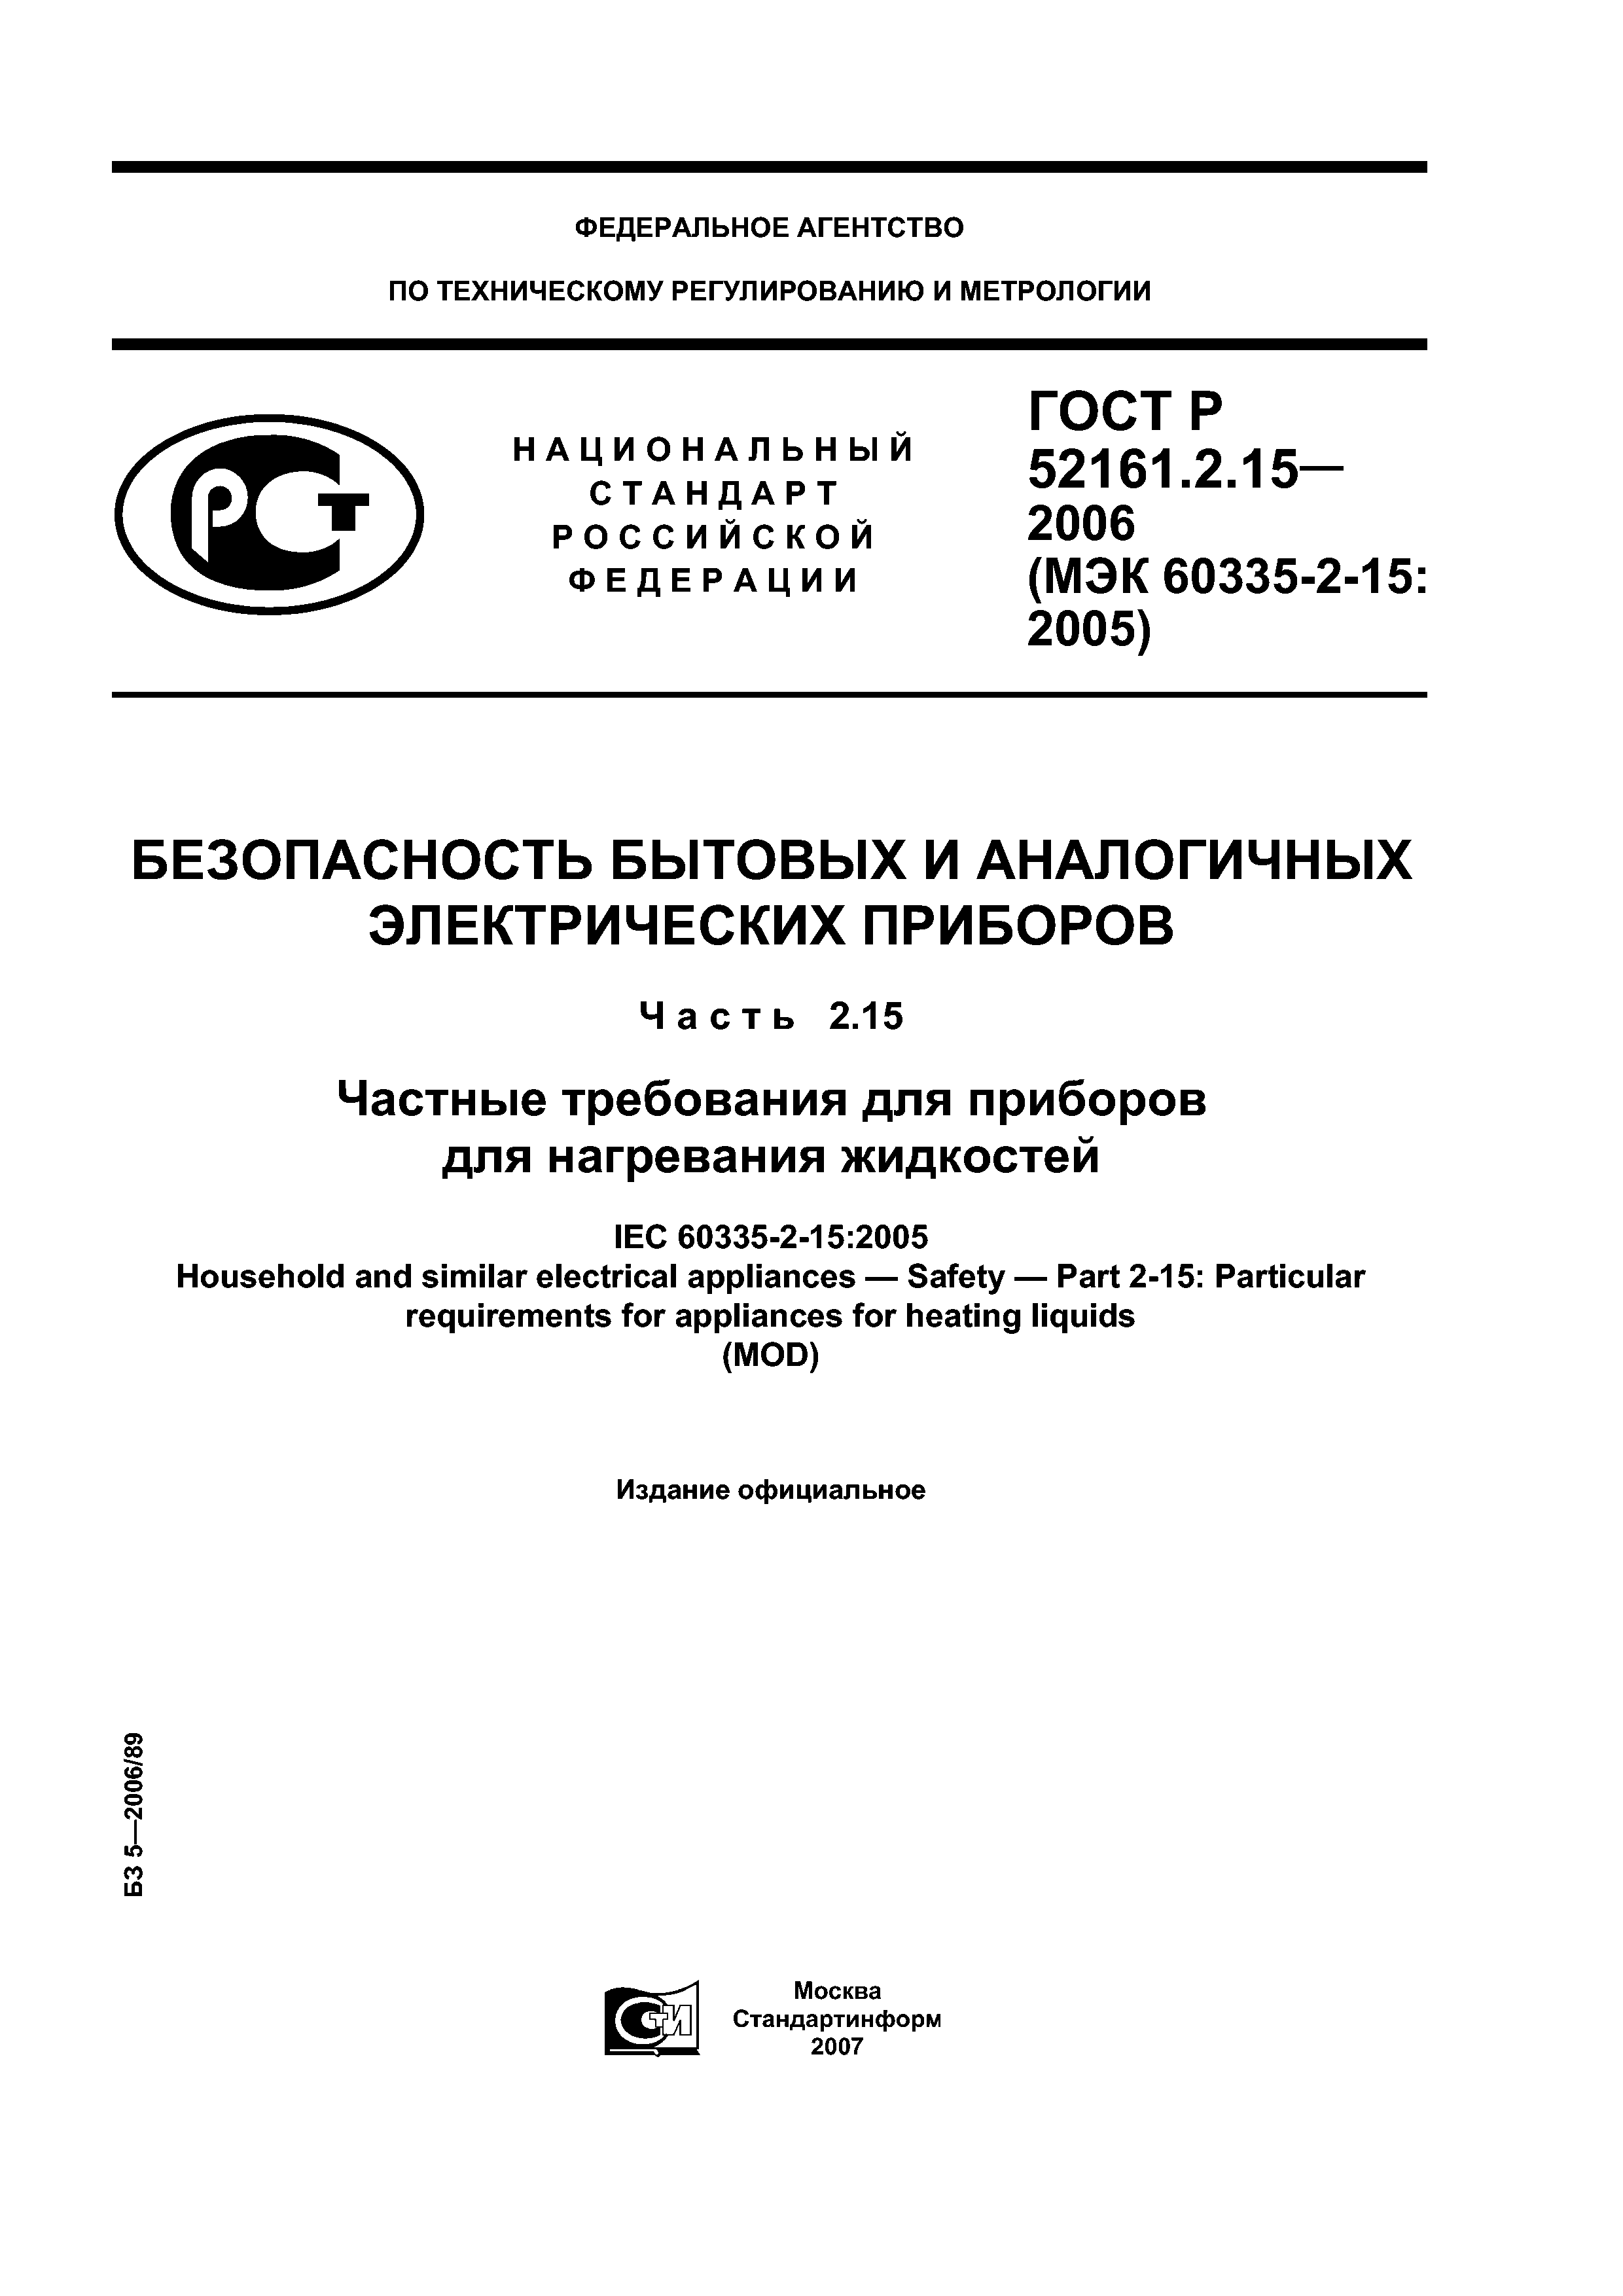 ГОСТ Р 52161.2.15-2006